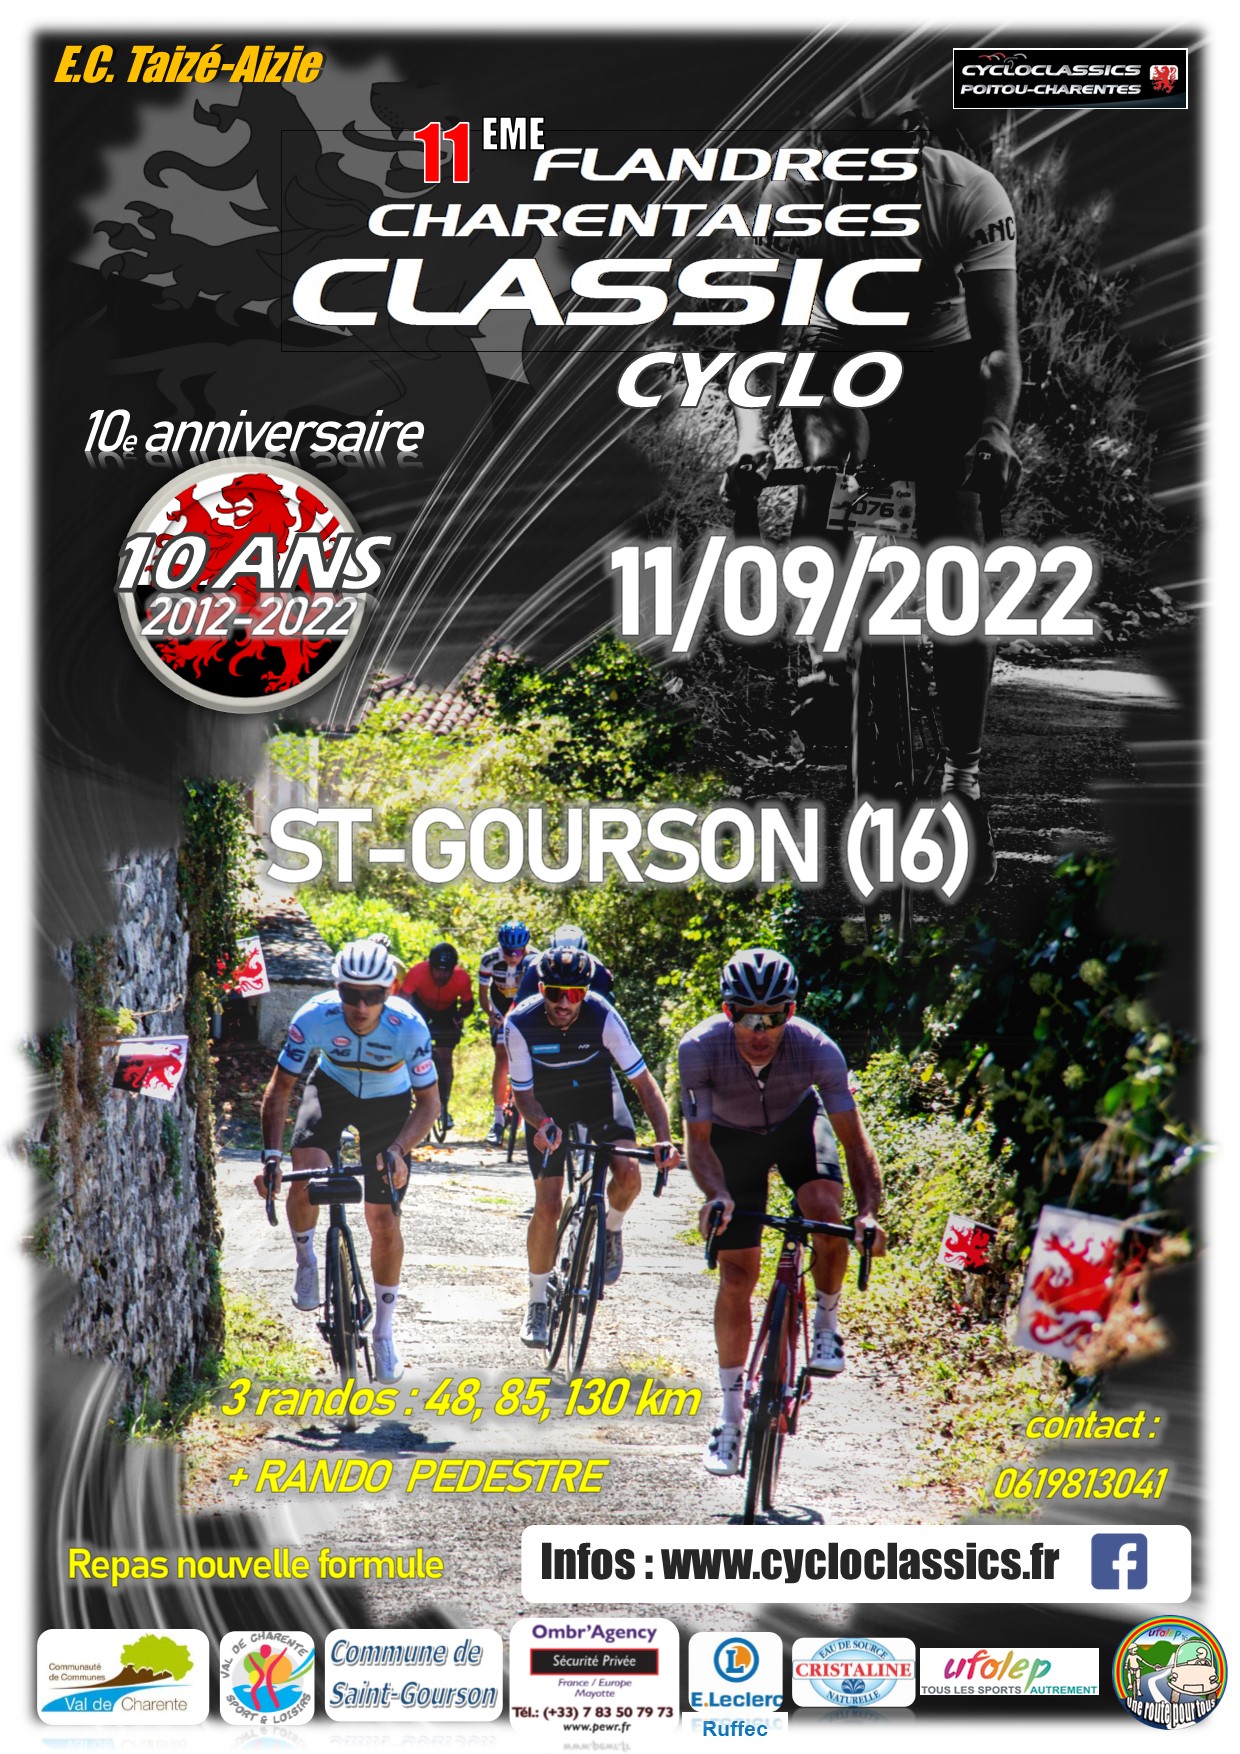 Flandres Charentaises Classic Cyclo